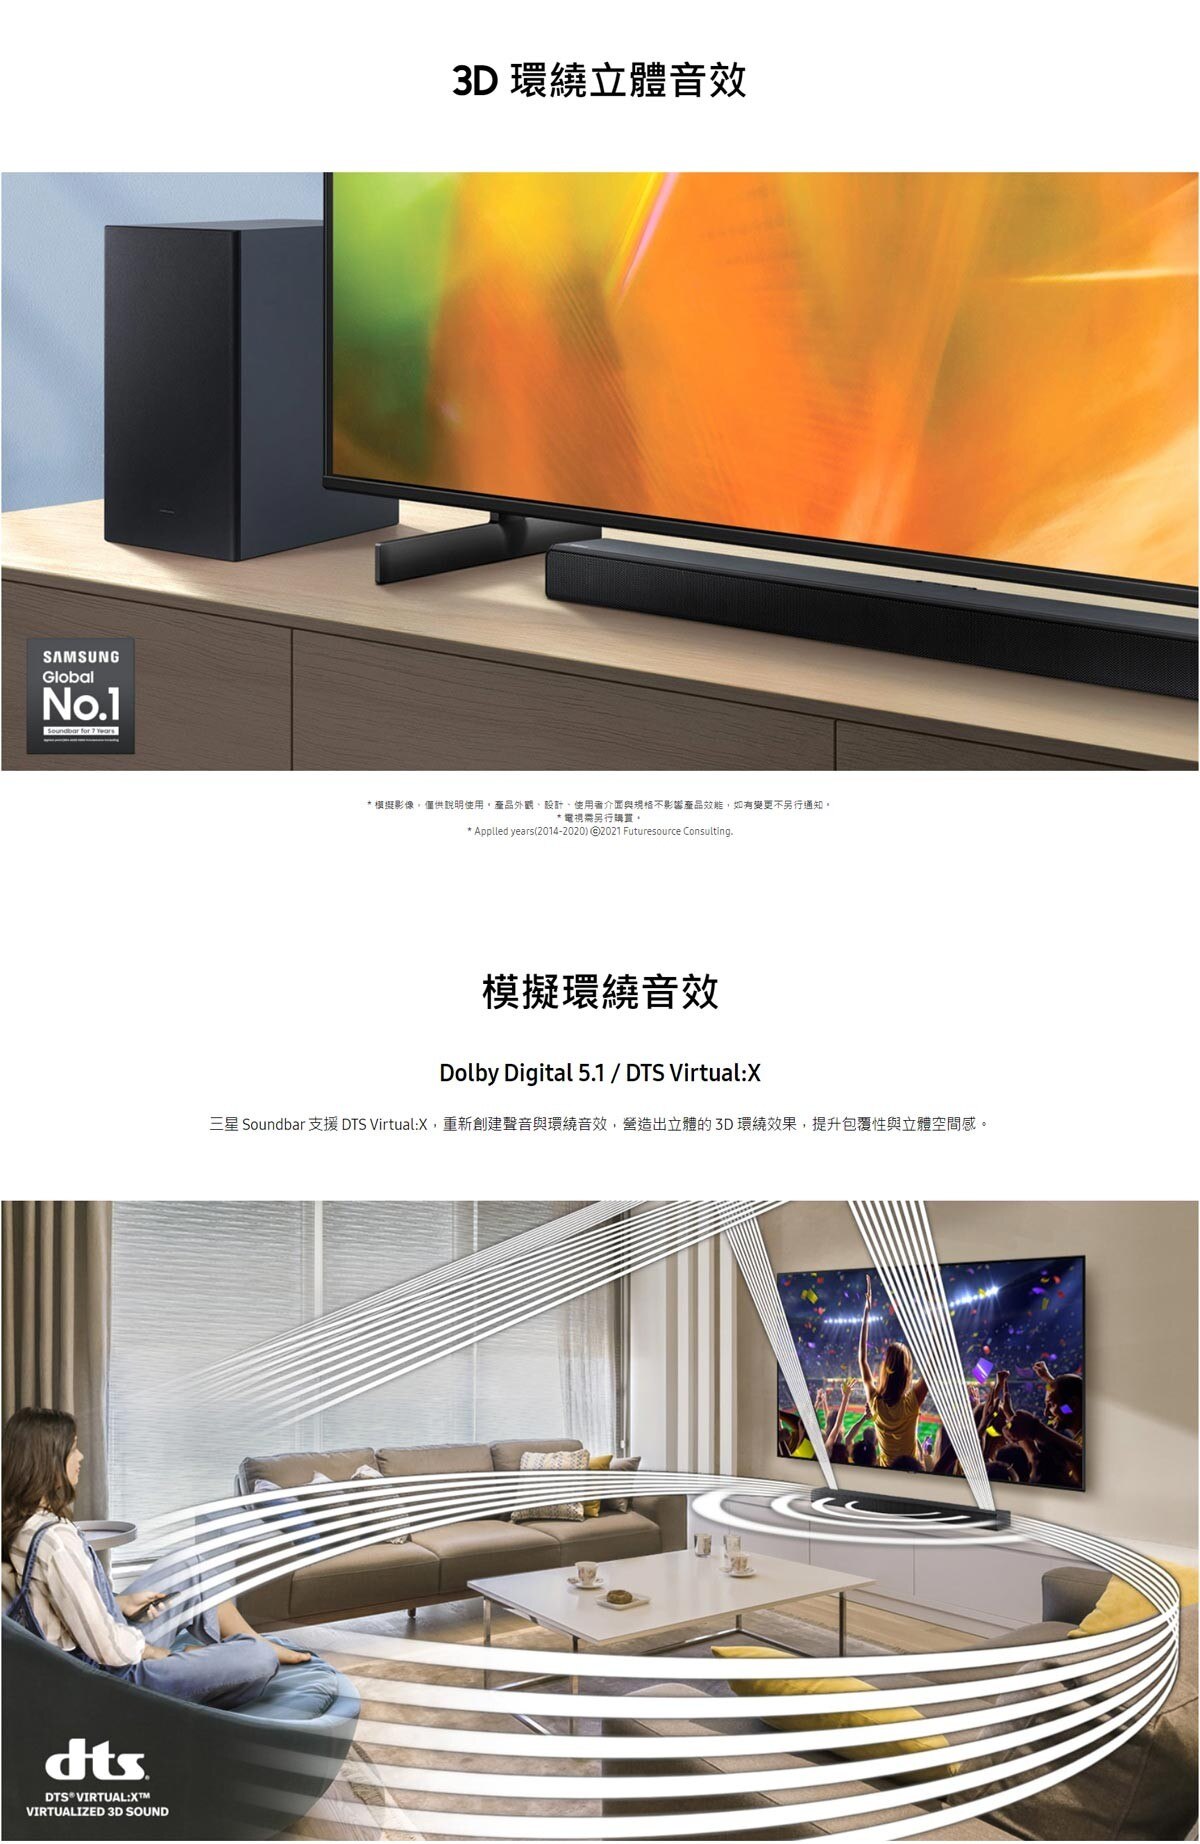 Samsung Smart TV+Soundbar UA55AU7700WXZW+HW-A550 電視音響組，4K高解像度提升功能，確保內容以最高4K解像度輸出，支援DTS Virtual:X，營造出立體3D環繞效果，提升包覆性立體空間感。